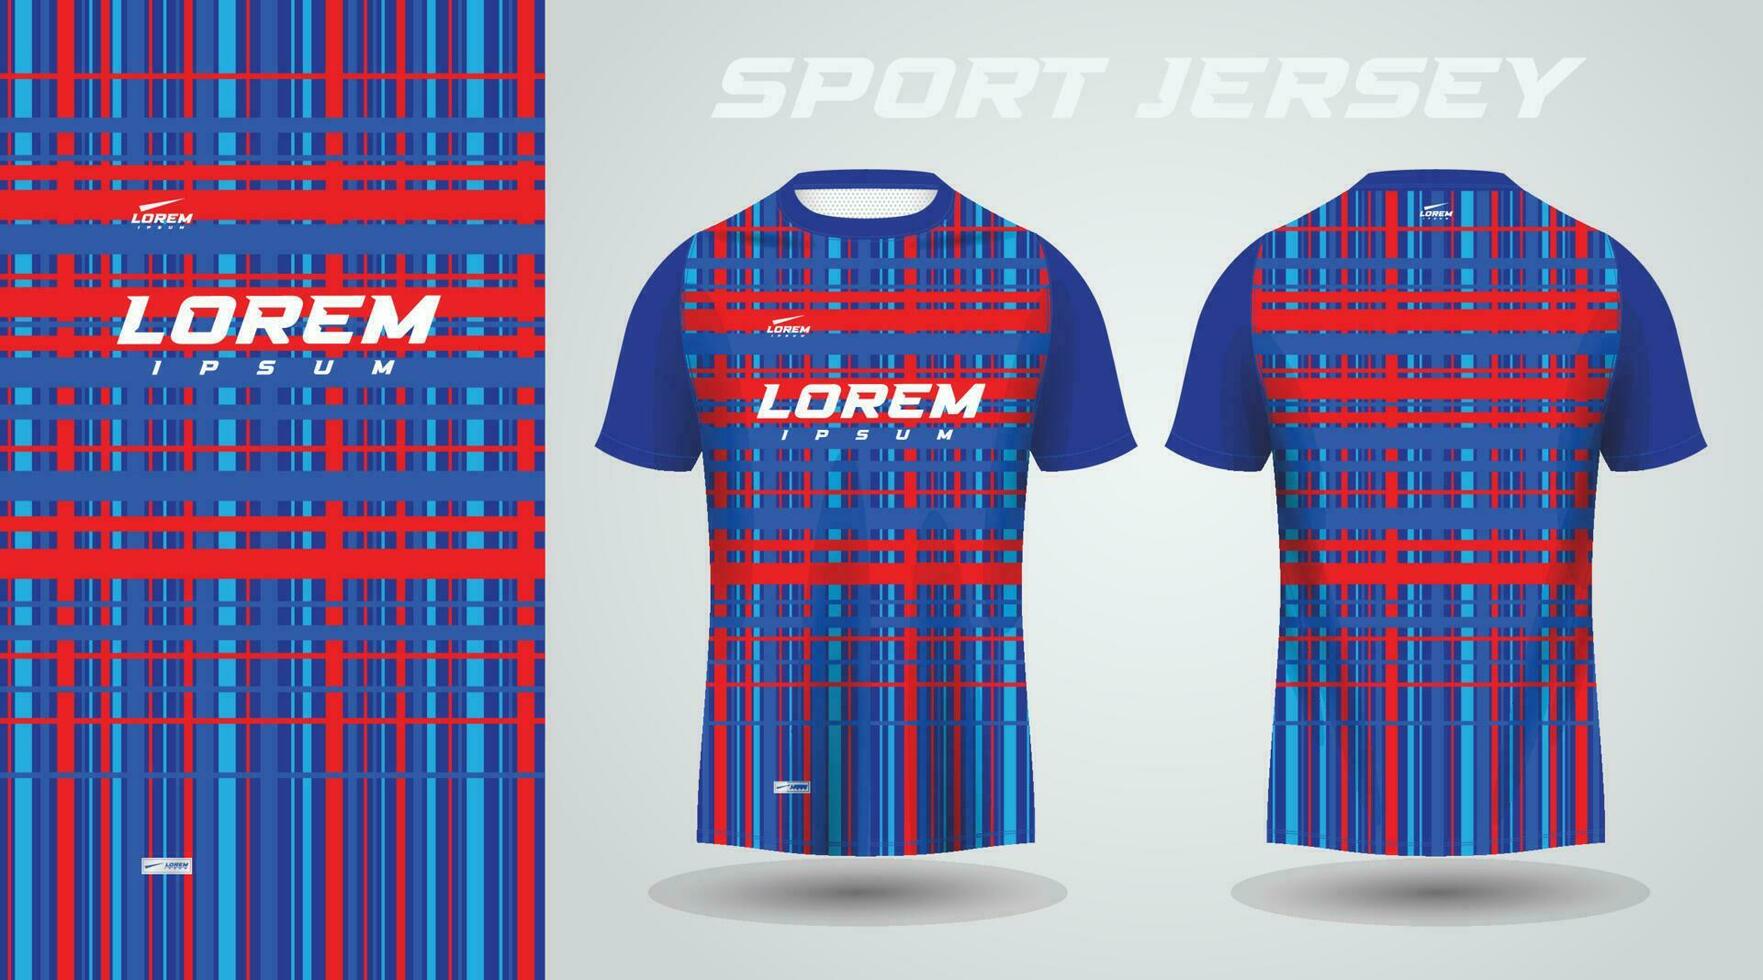 blauw rood overhemd voetbal Amerikaans voetbal sport Jersey sjabloon ontwerp mockup vector